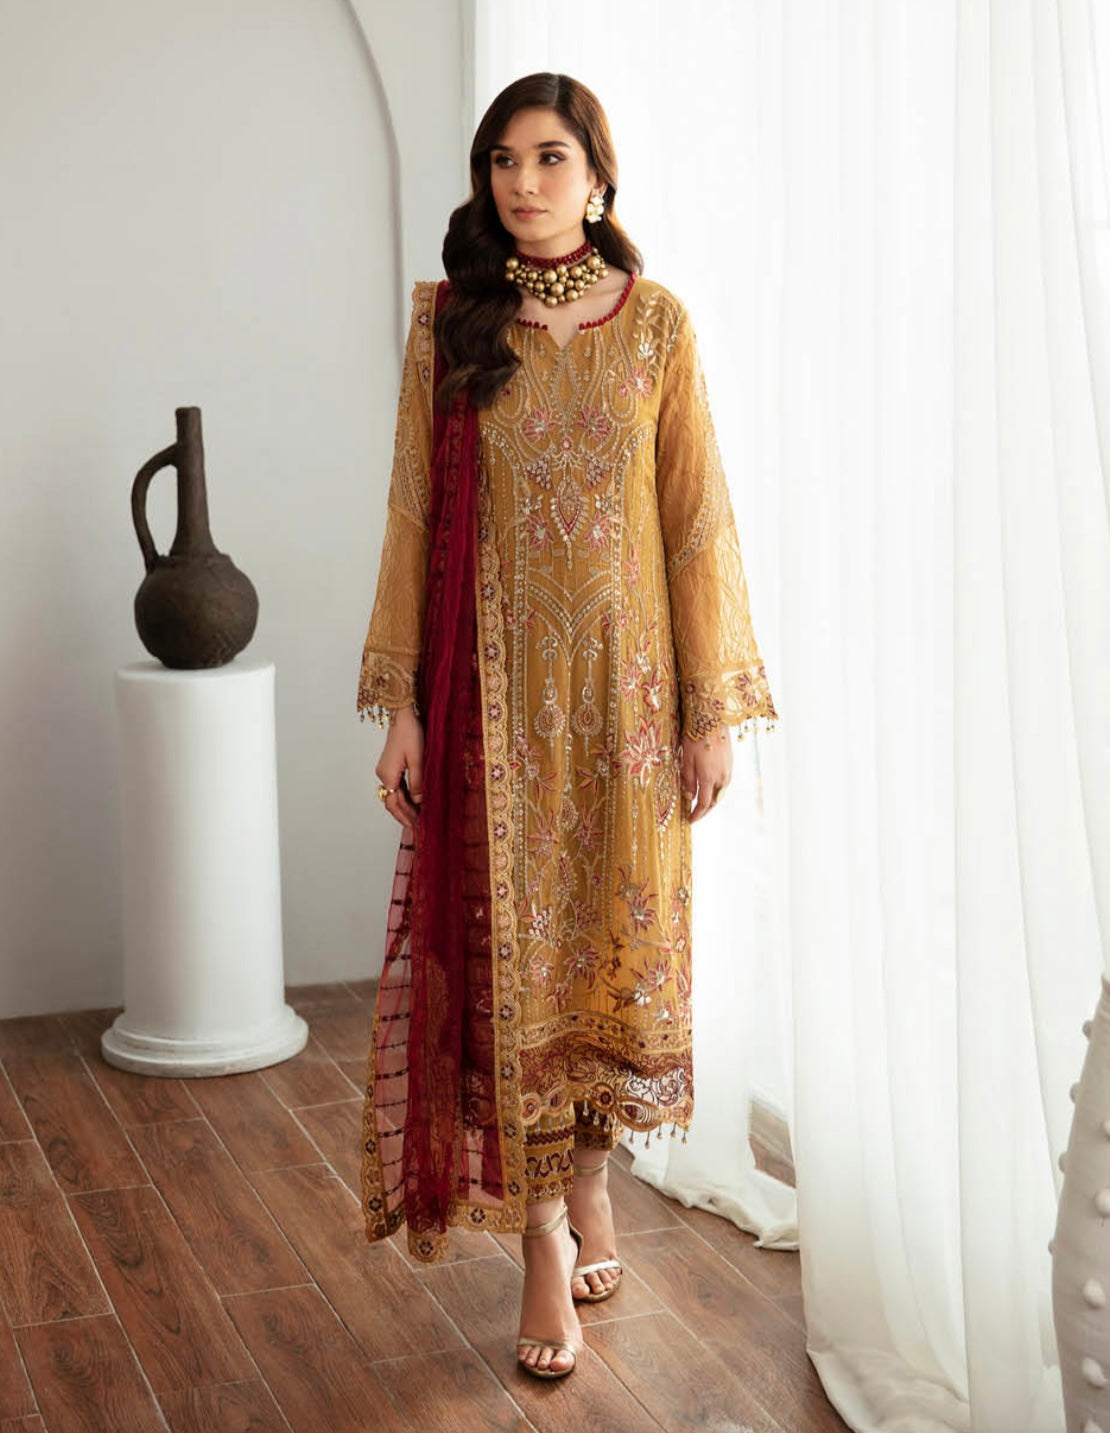  Ramsha - Pakistani clothes